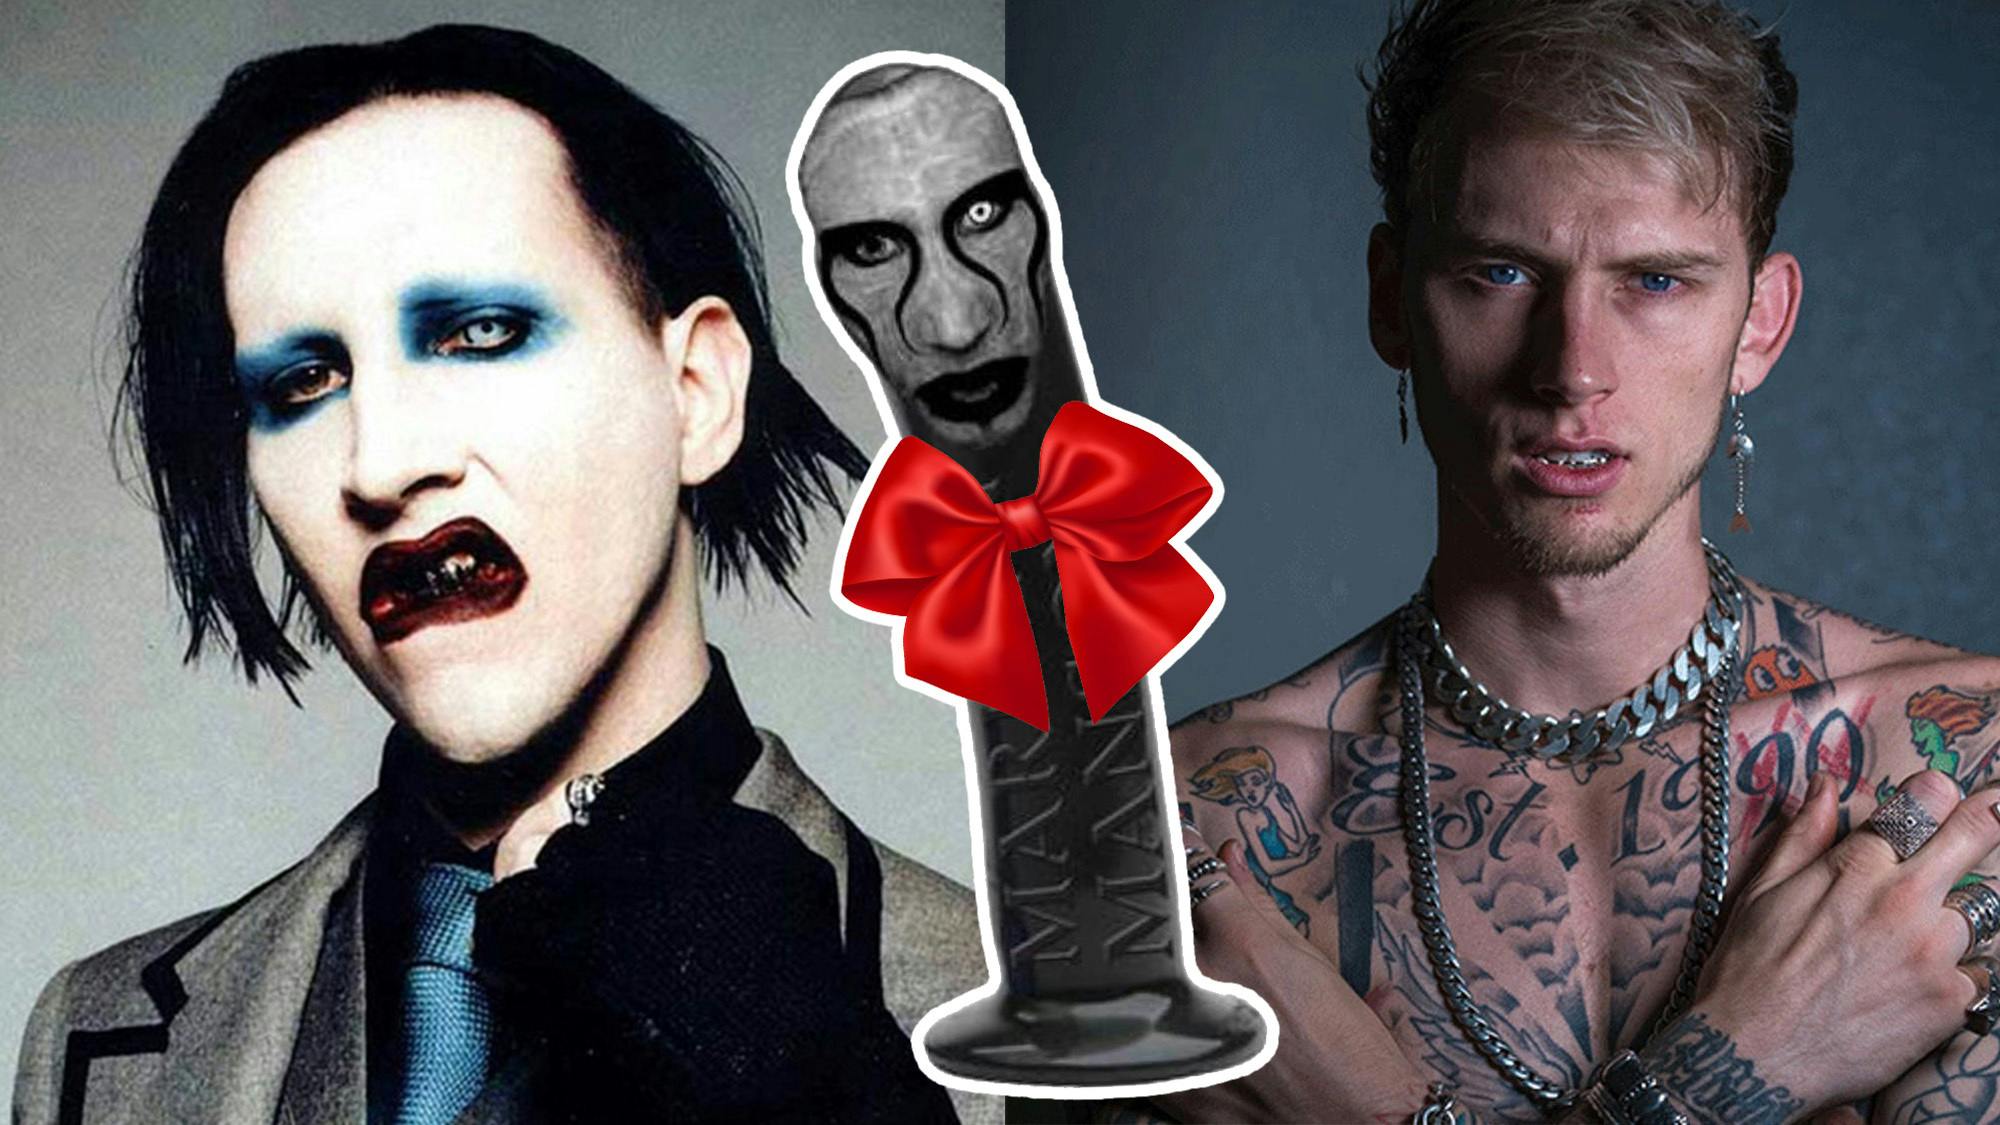 Marilyn Manson Gave A Dildo To Machine Gun Kelly For His Birthday